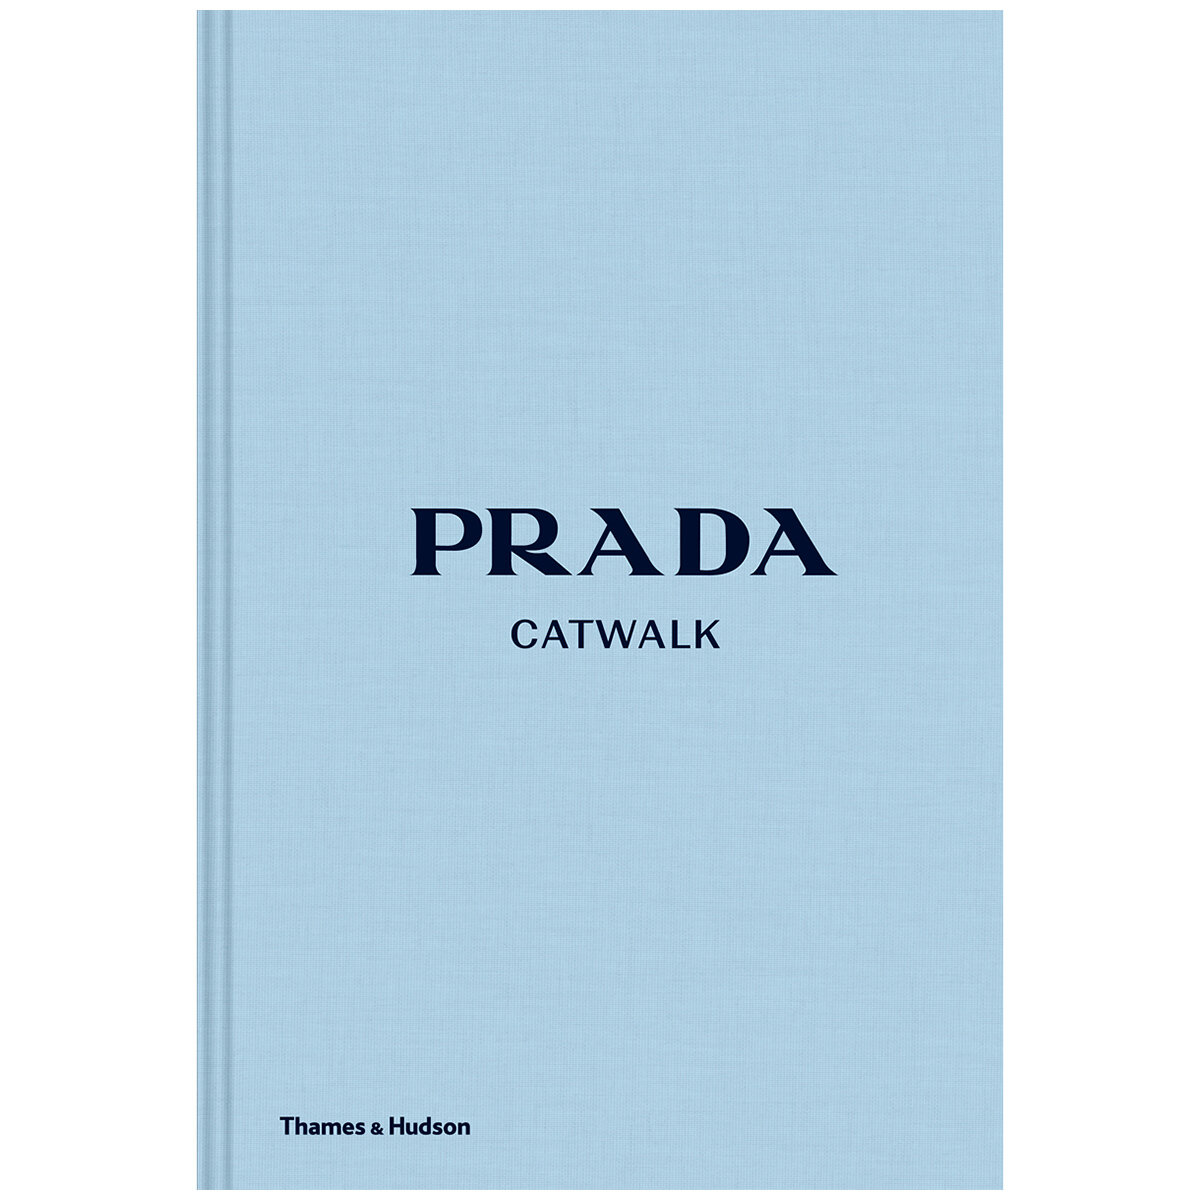 PRADA Catwalk | Costco Australia